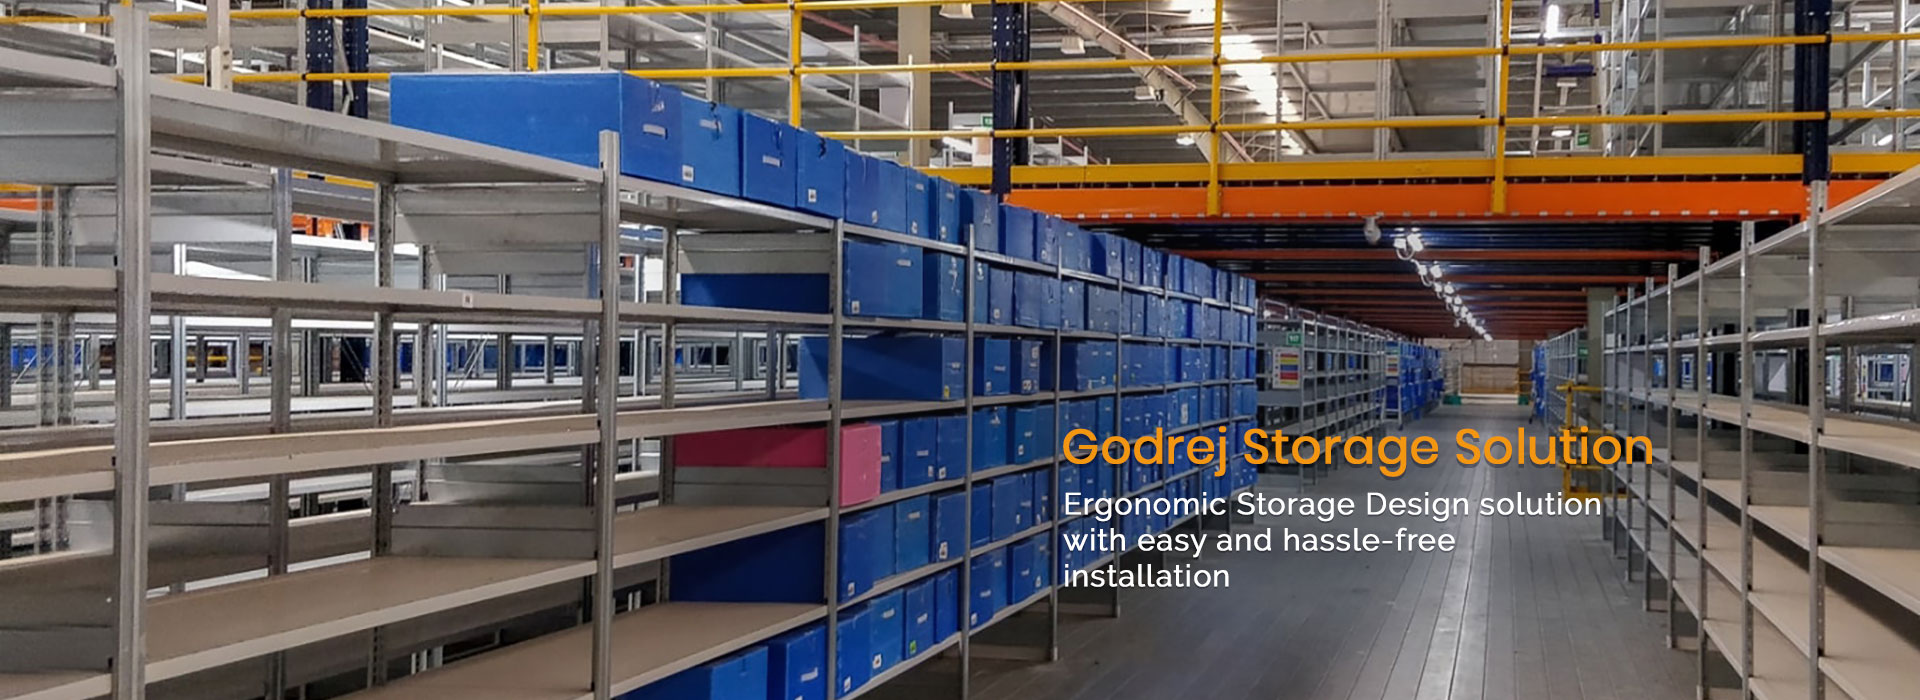 Godrej Storage Solutions in Aerocity